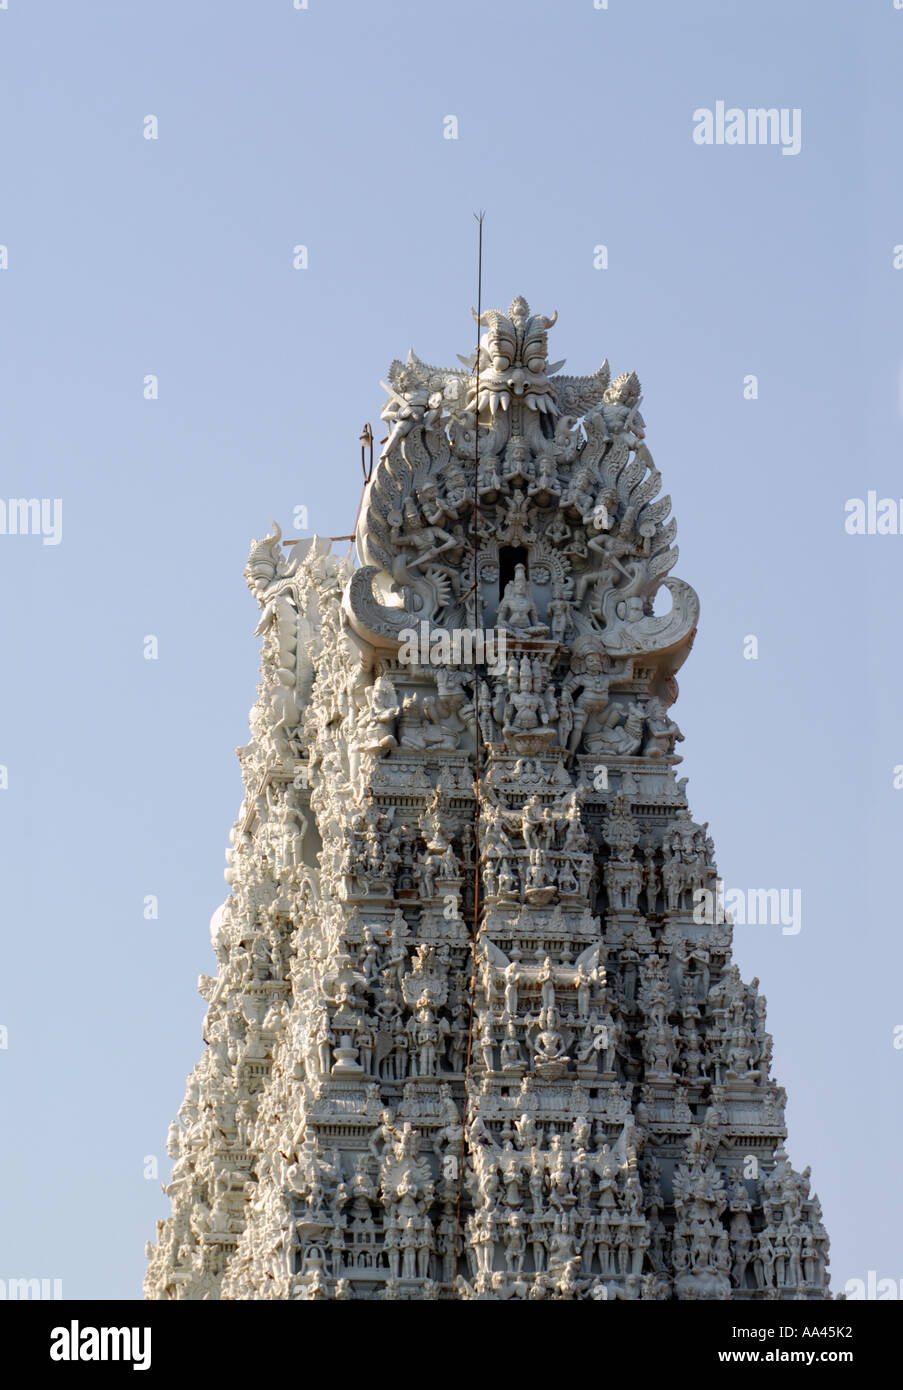 Stanunathaswami Temple at Suchindram, Tamil Nadu, Southern India Stock Photo